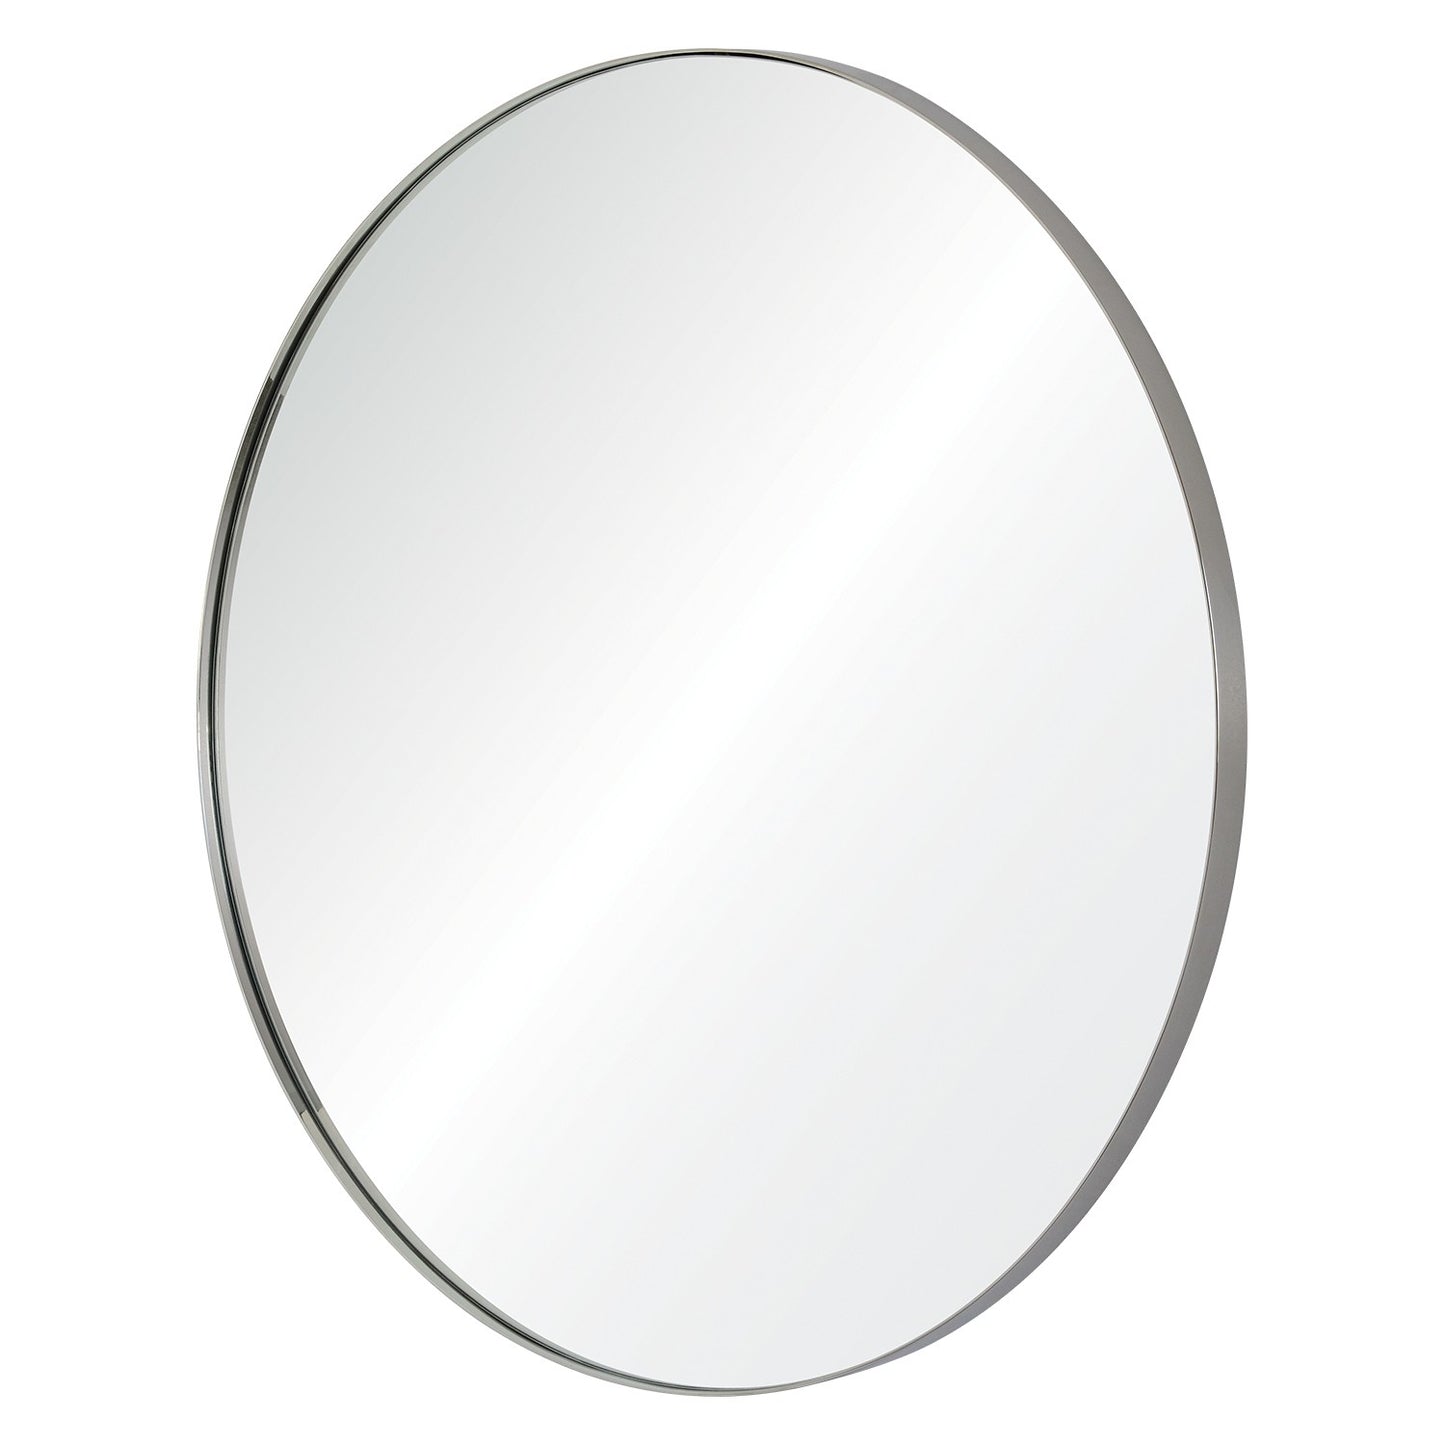 Simple Thin Round Mirror